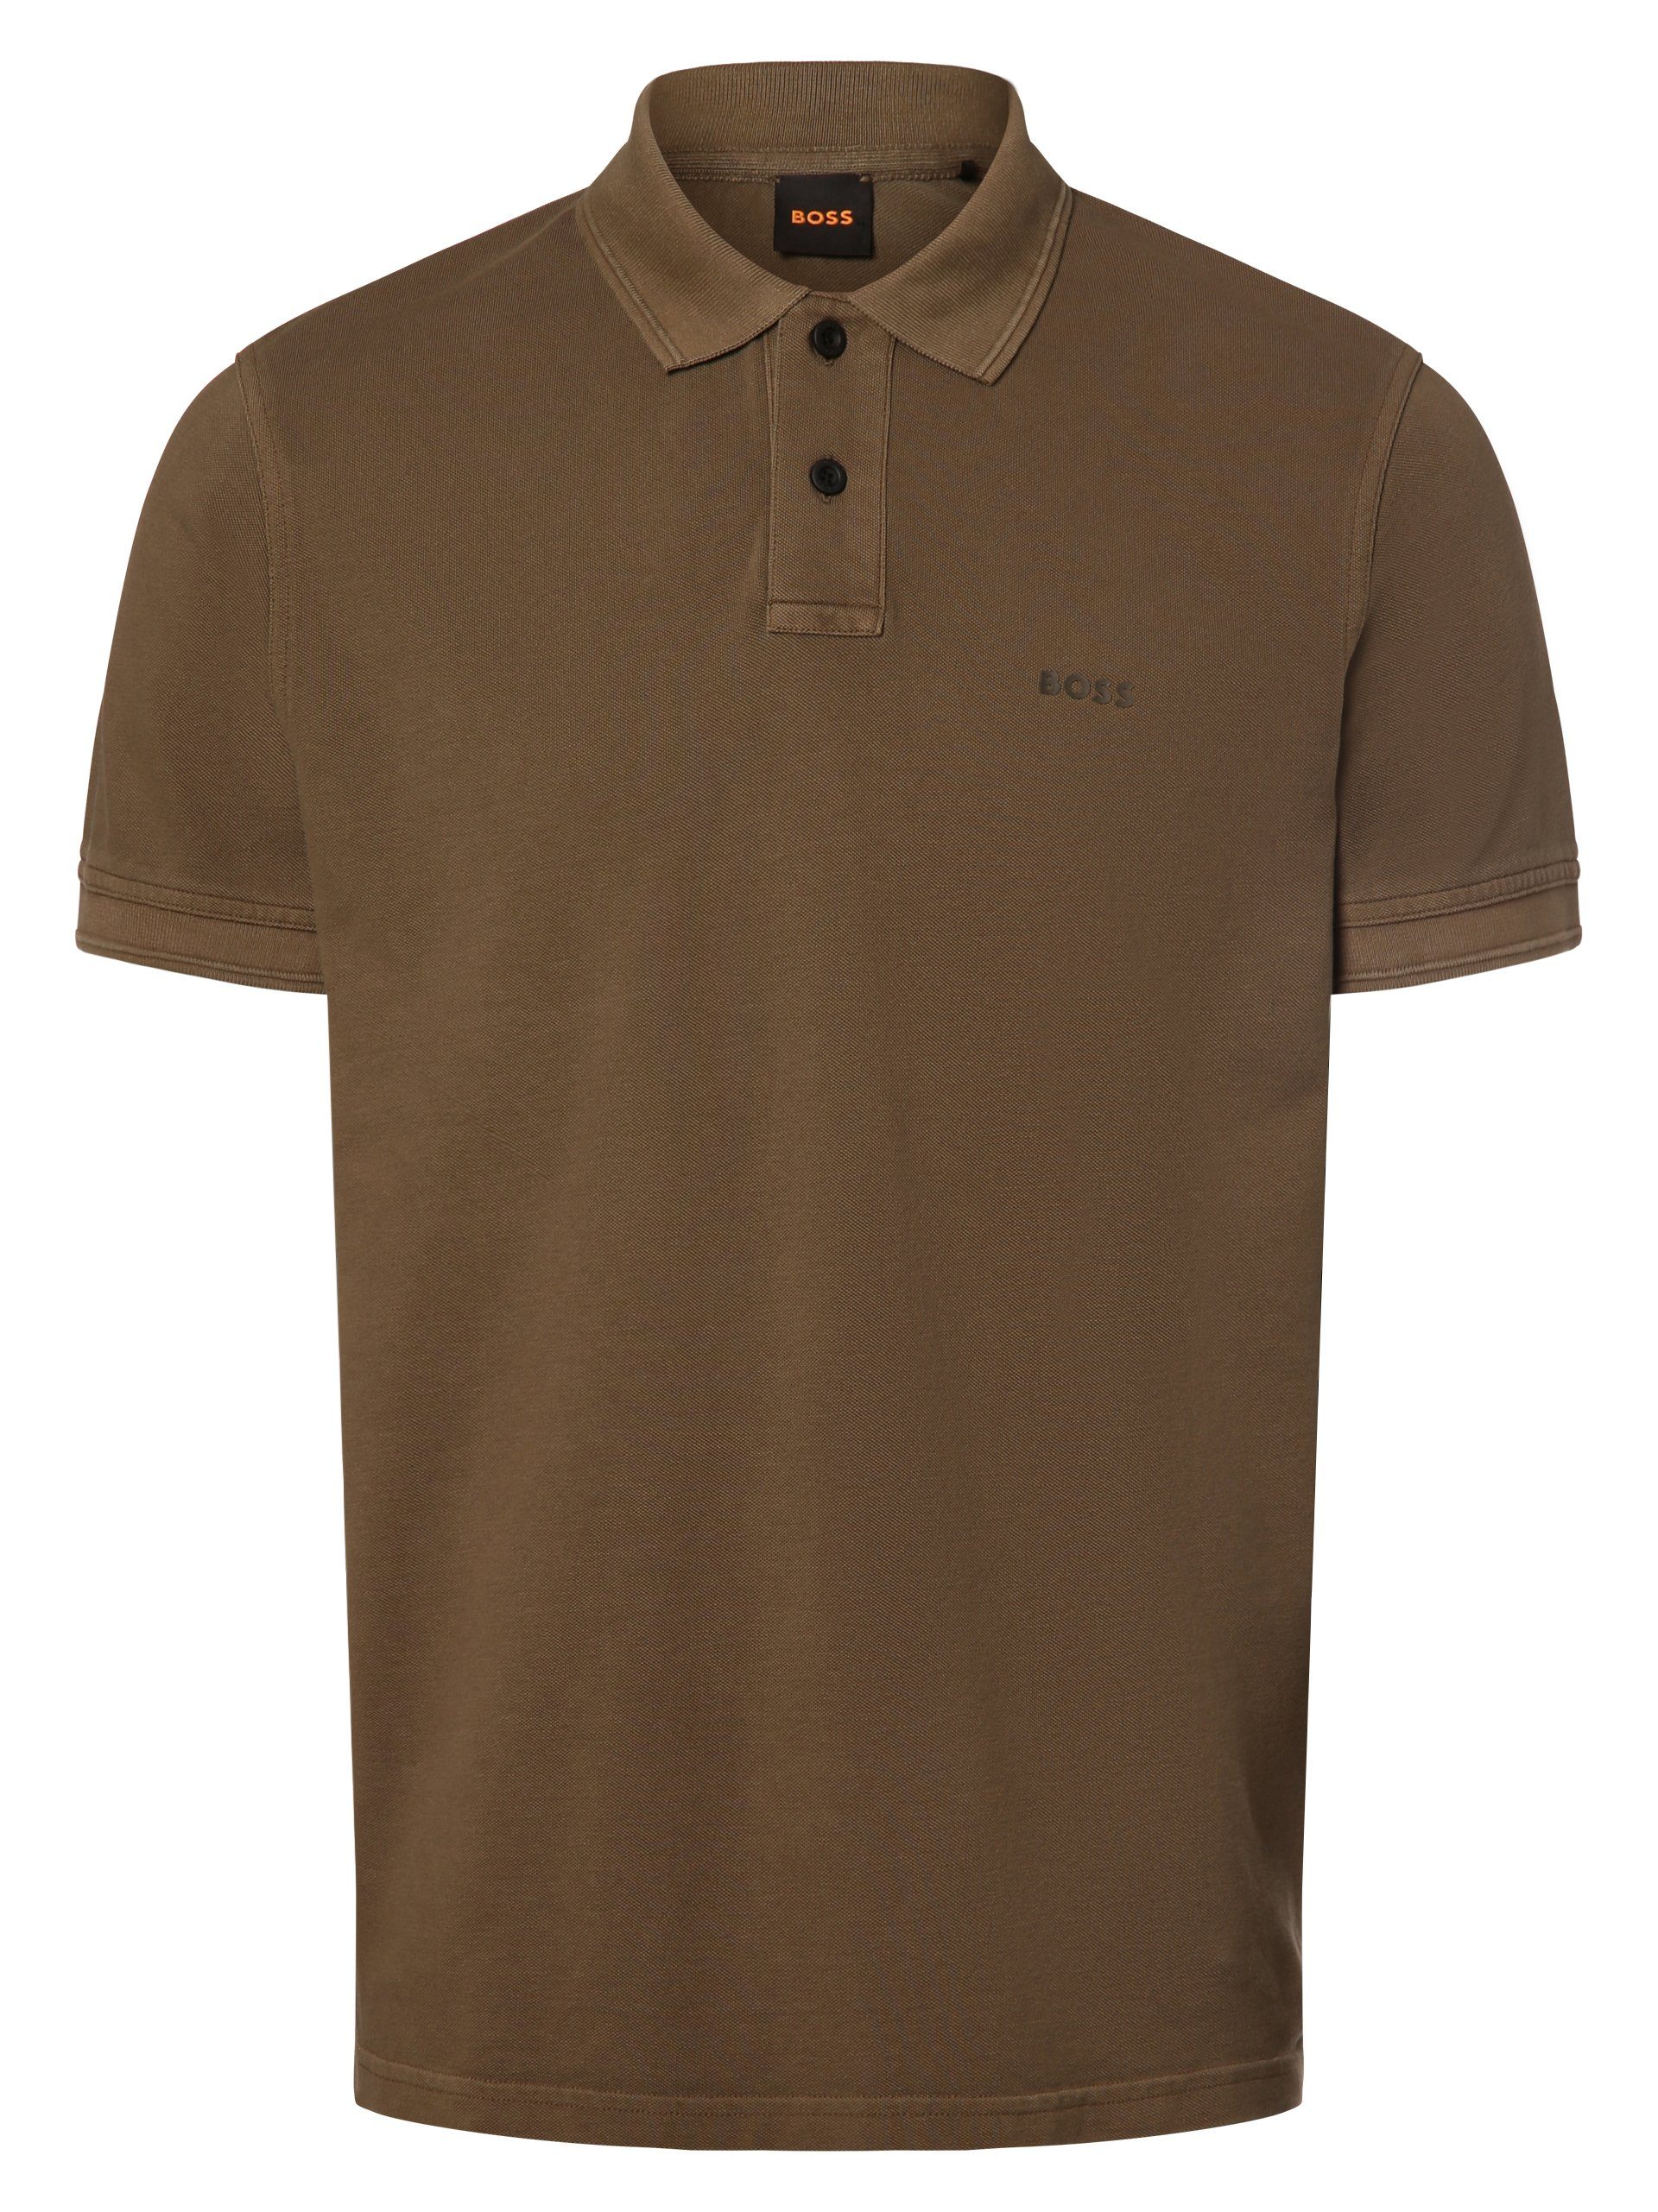 BOSS ORANGE Poloshirt Prime khaki | Poloshirts